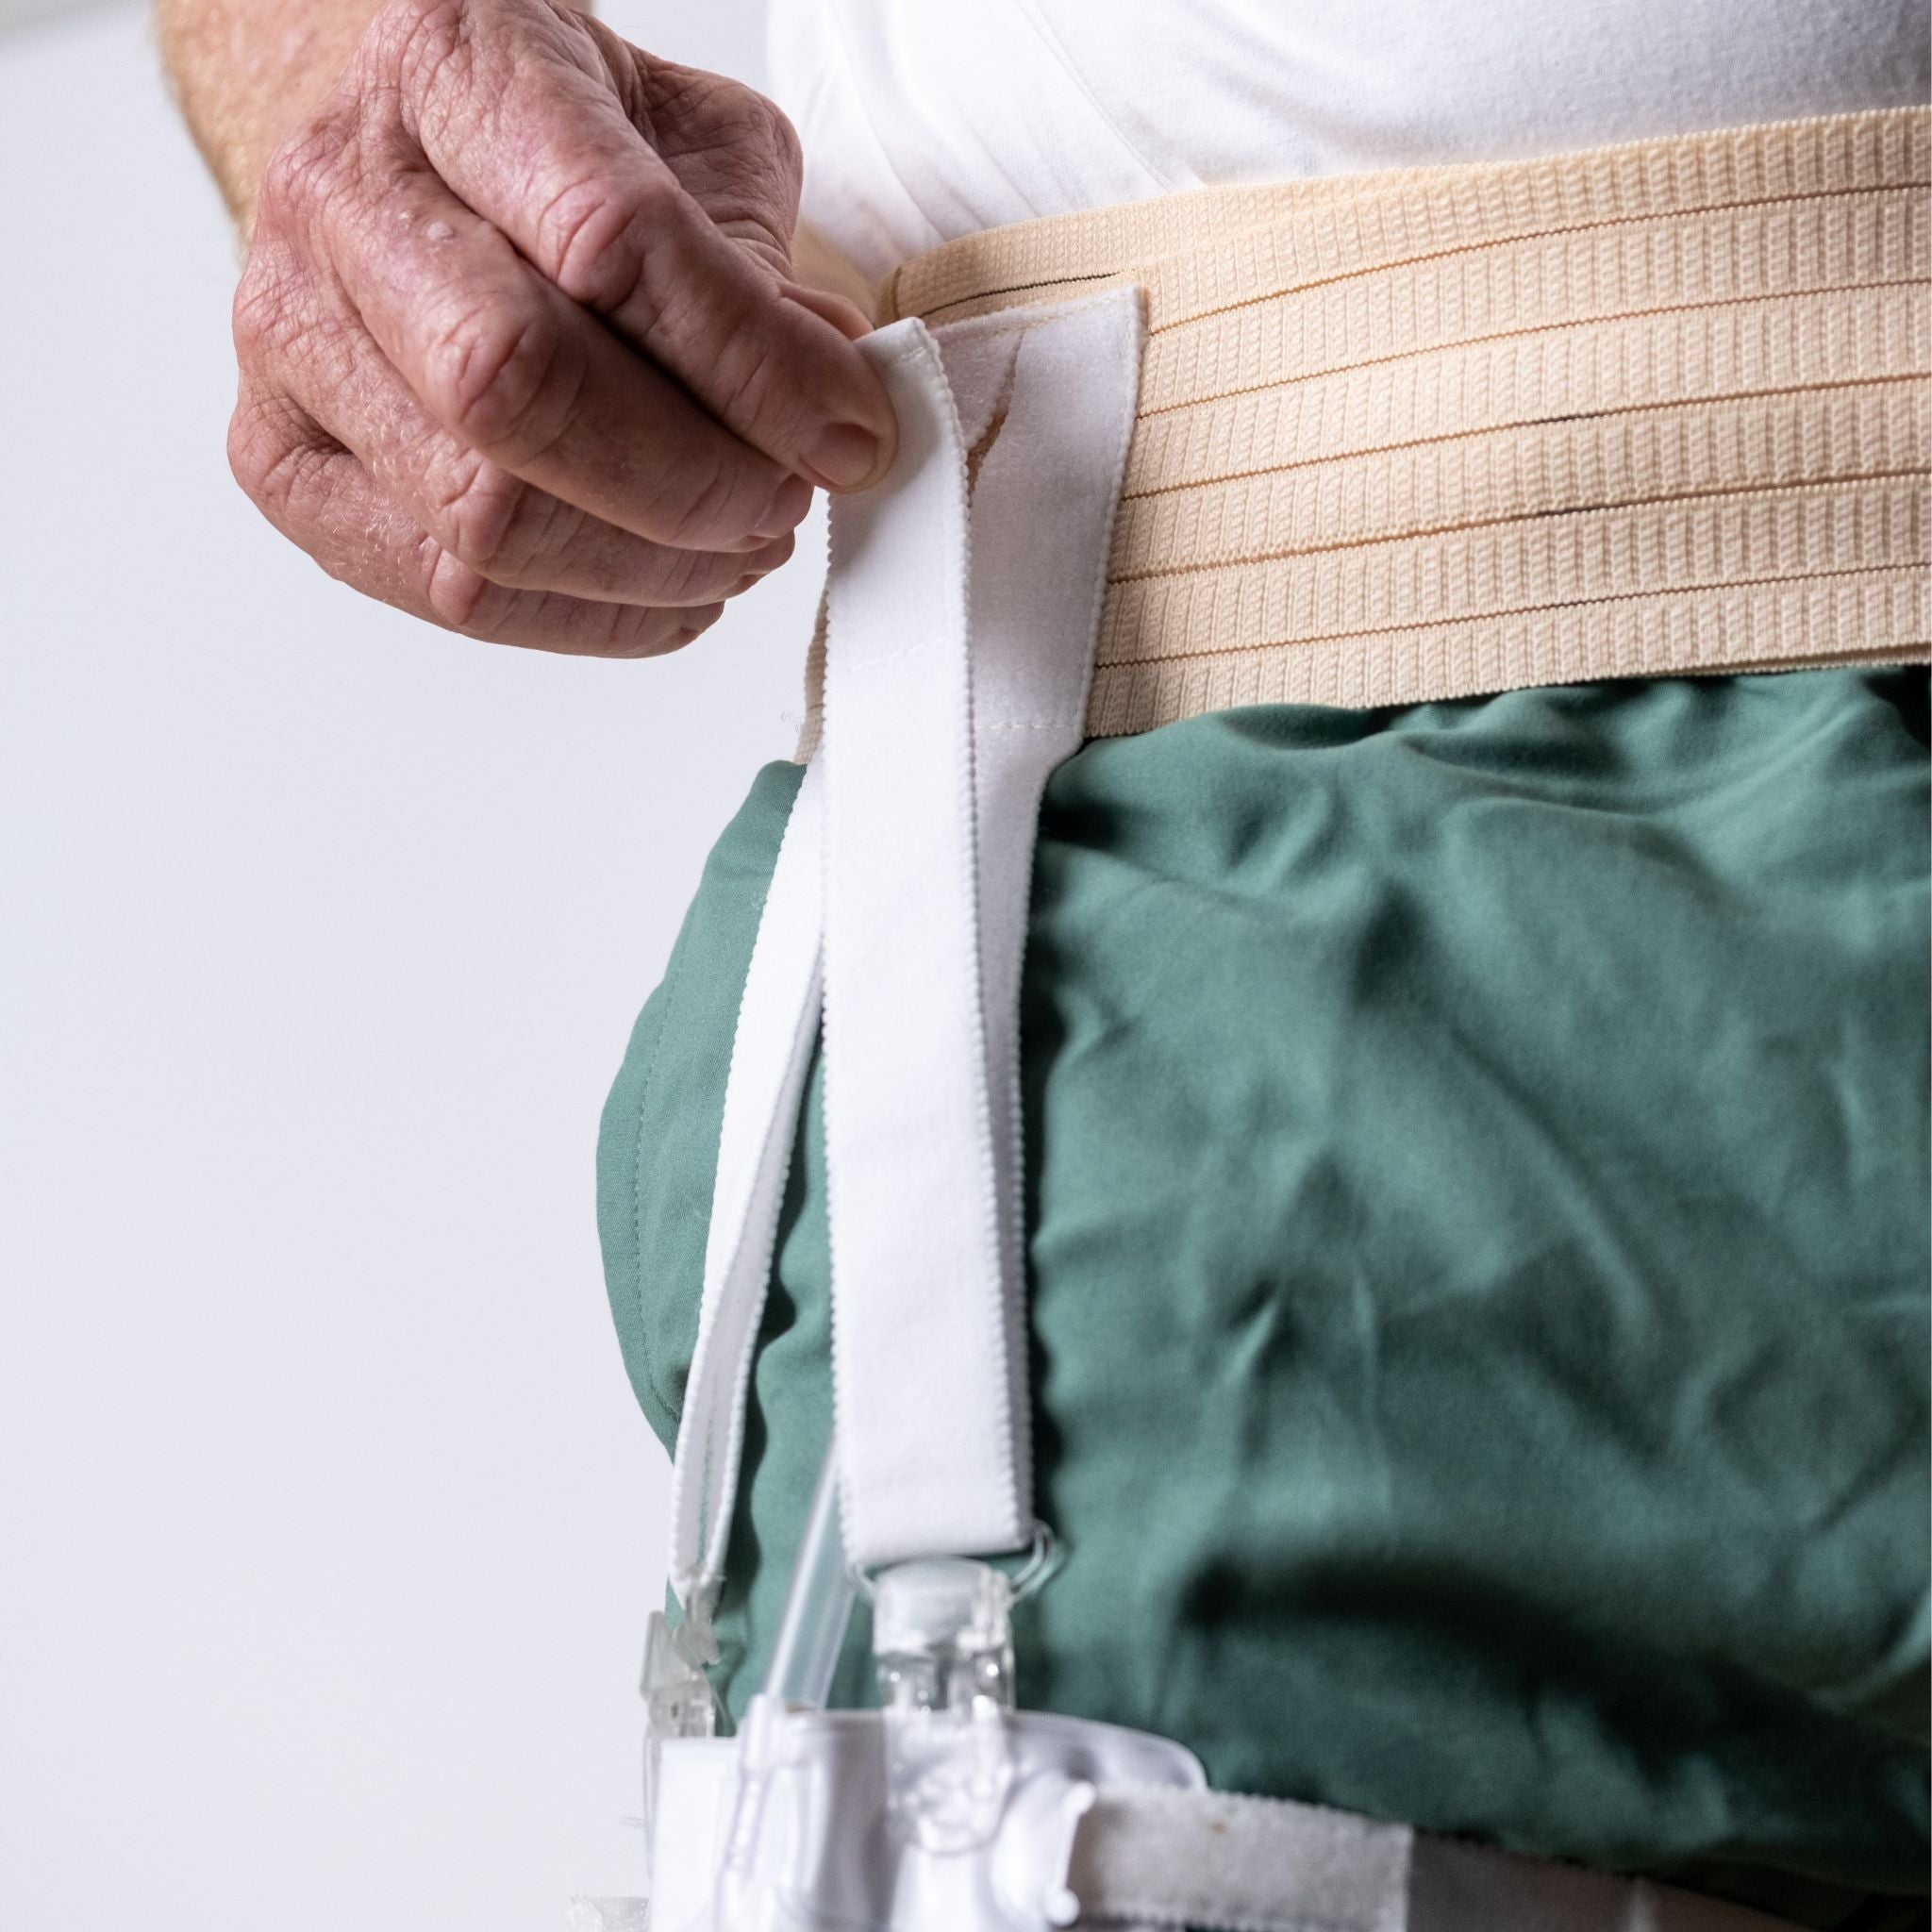 Catheter Leg Bag Support Belt - Belly Bands